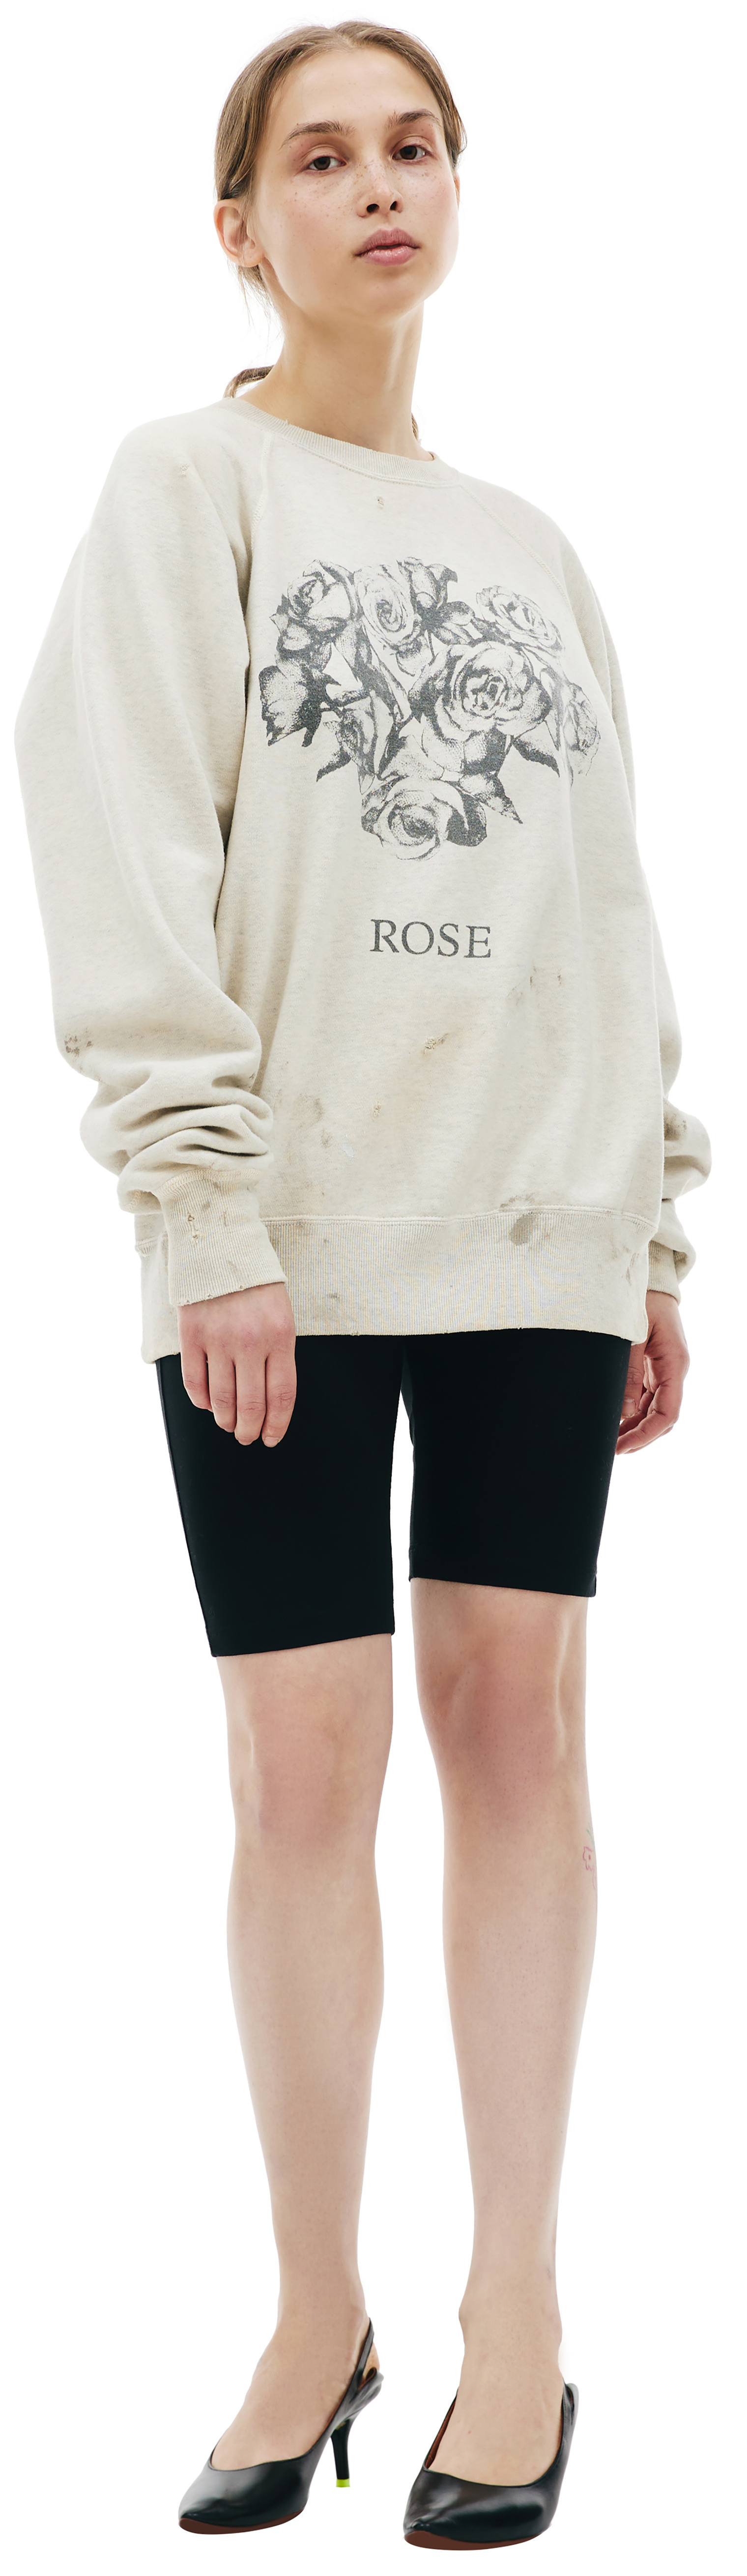 Saint Michael Rose printed sweatshirt